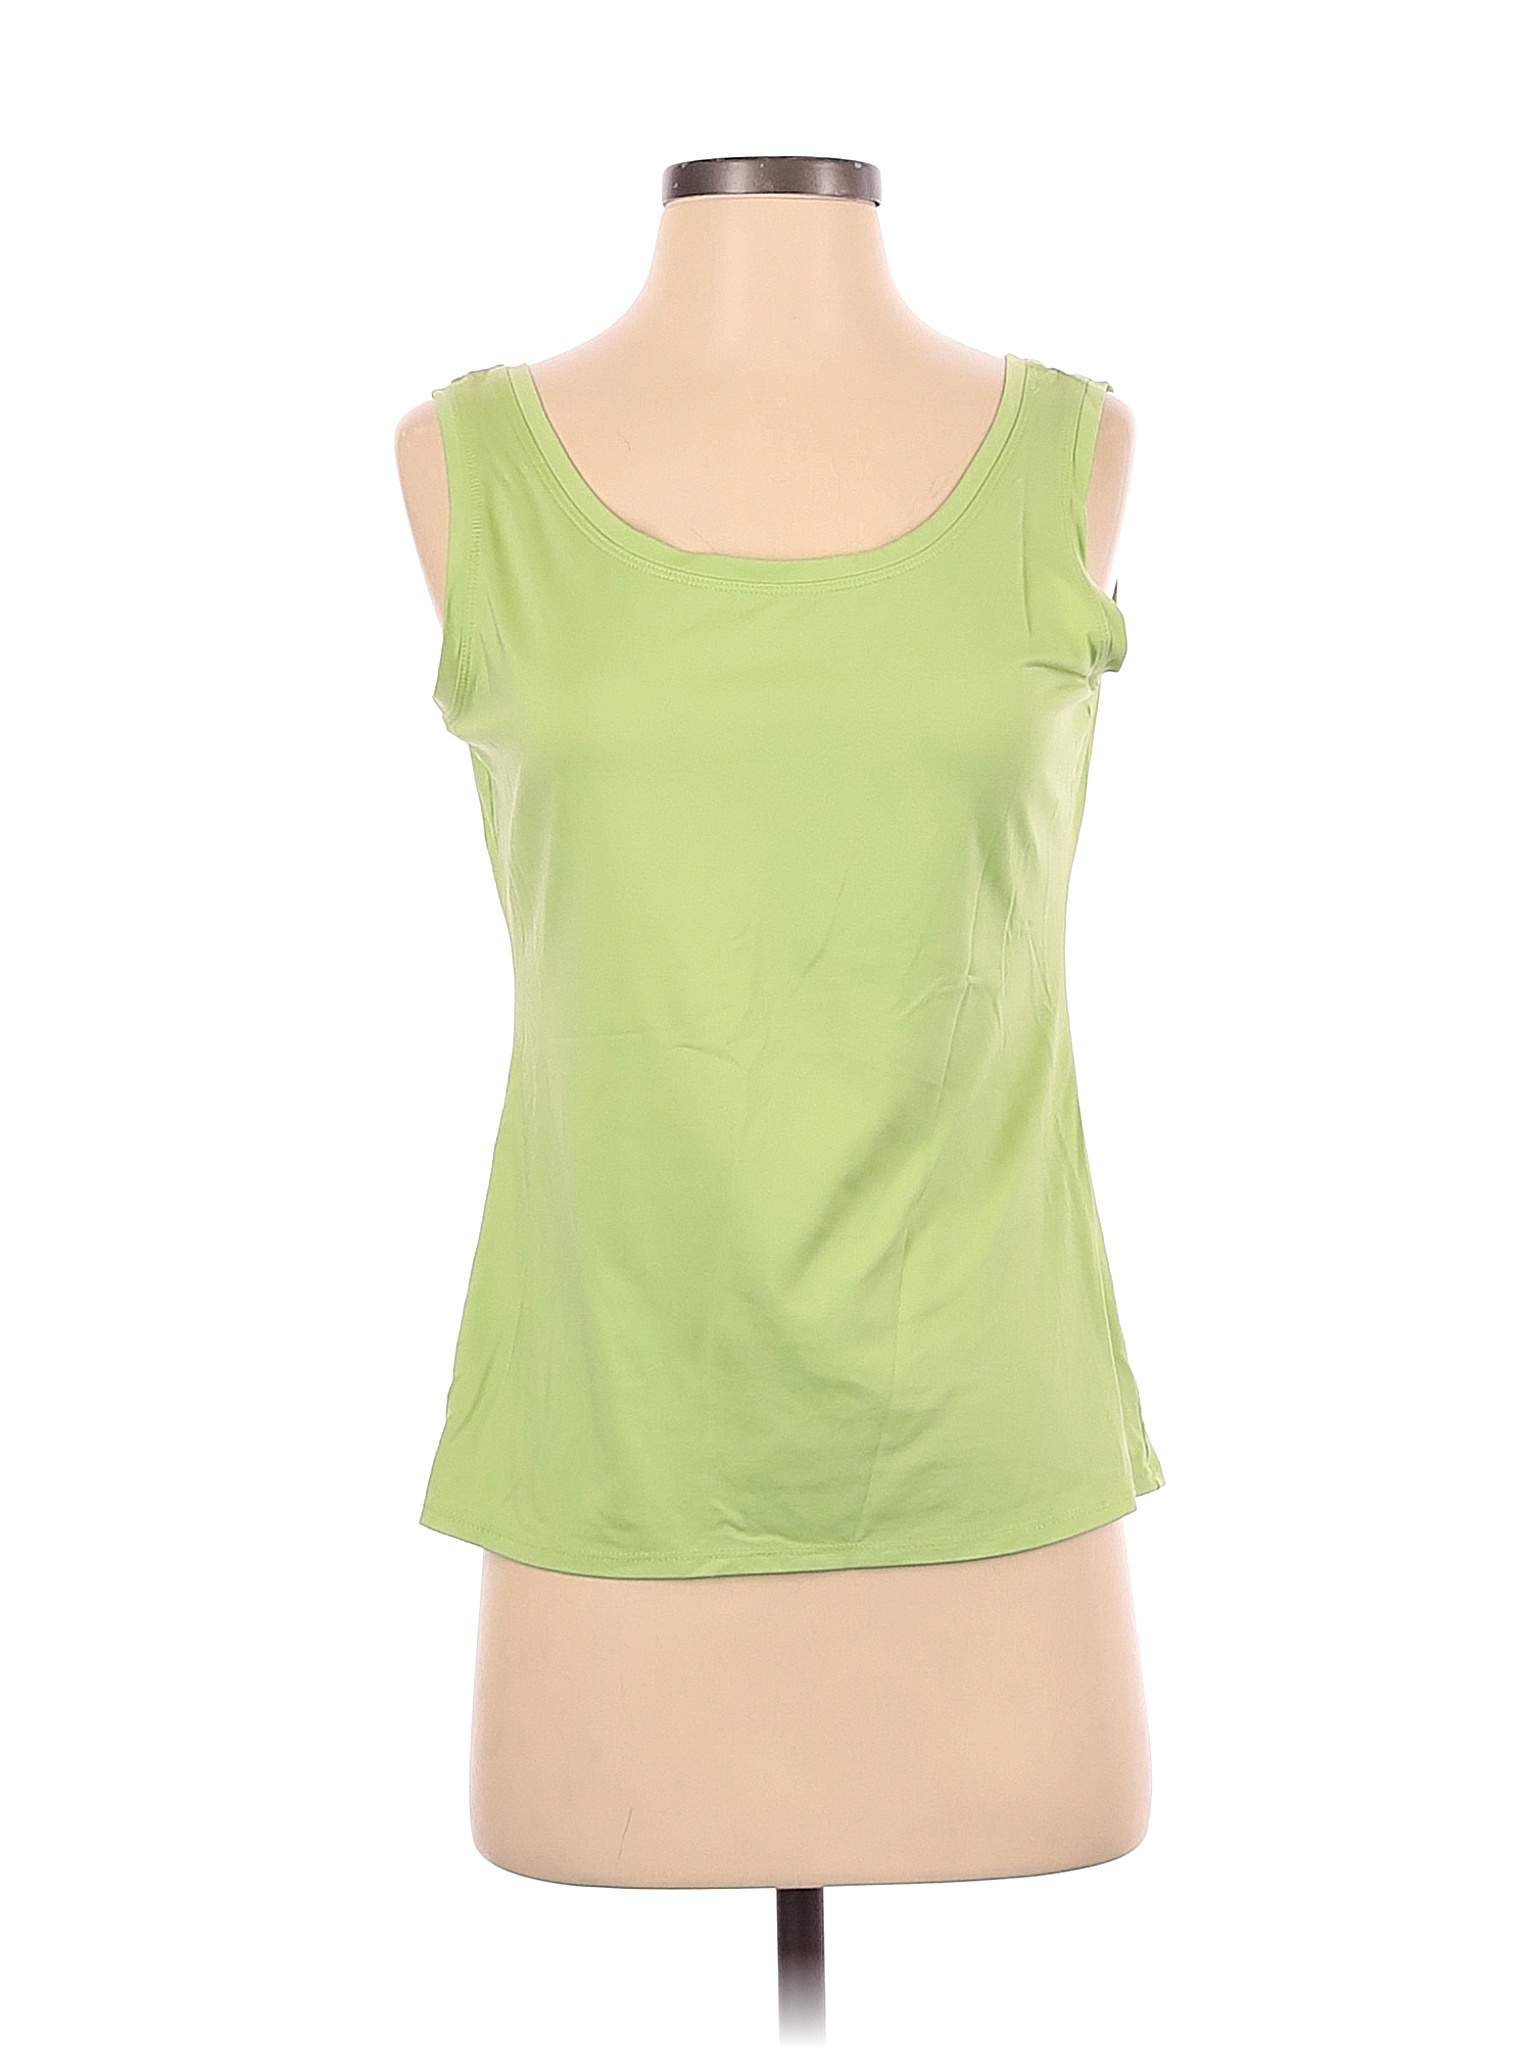 Peter Nygard Solid Green Sleeveless Top Size S - 71% off | thredUP